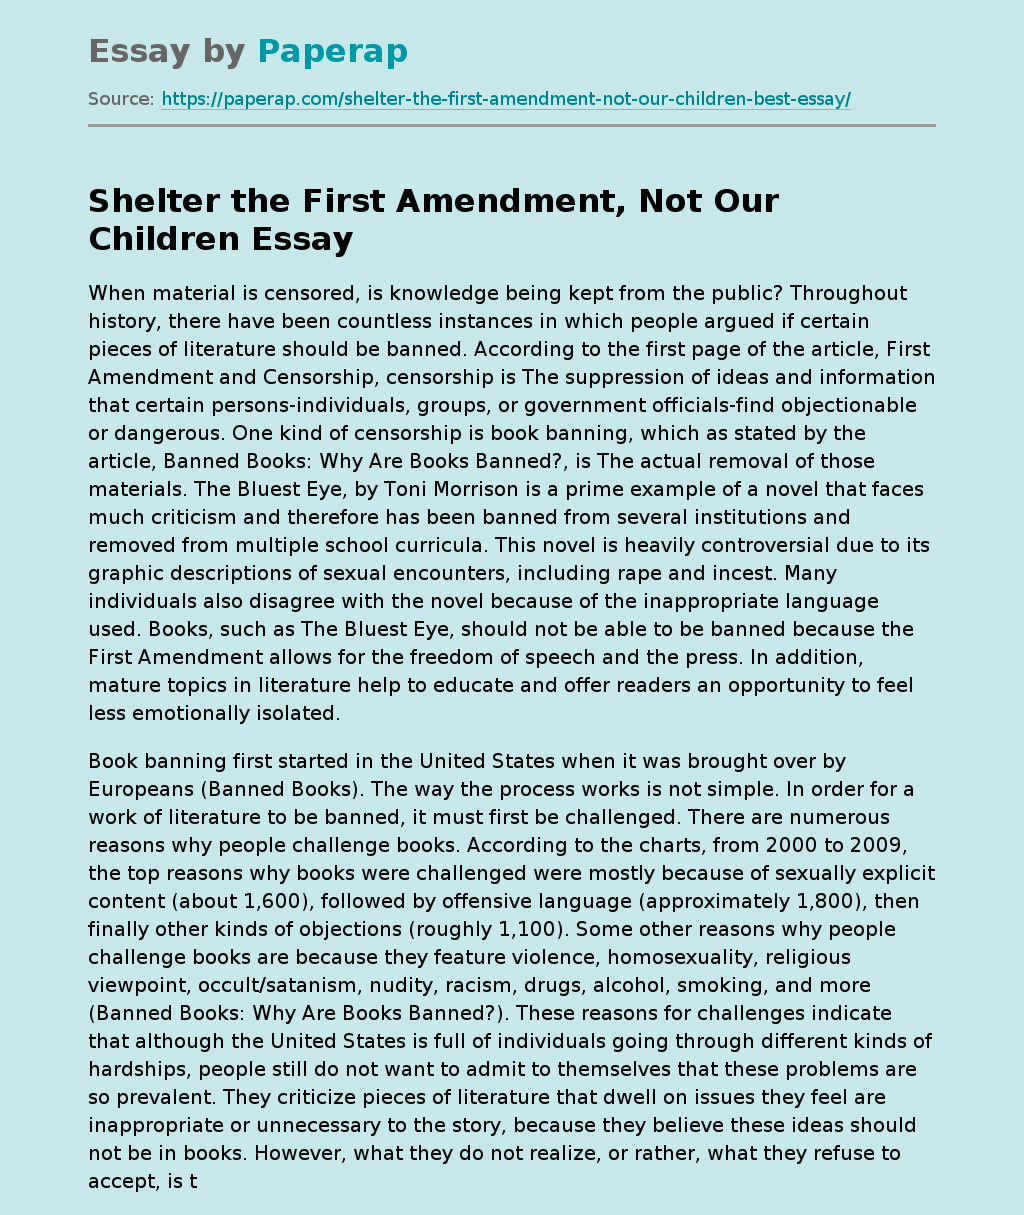 Shelter the First Amendment, Not Our Children